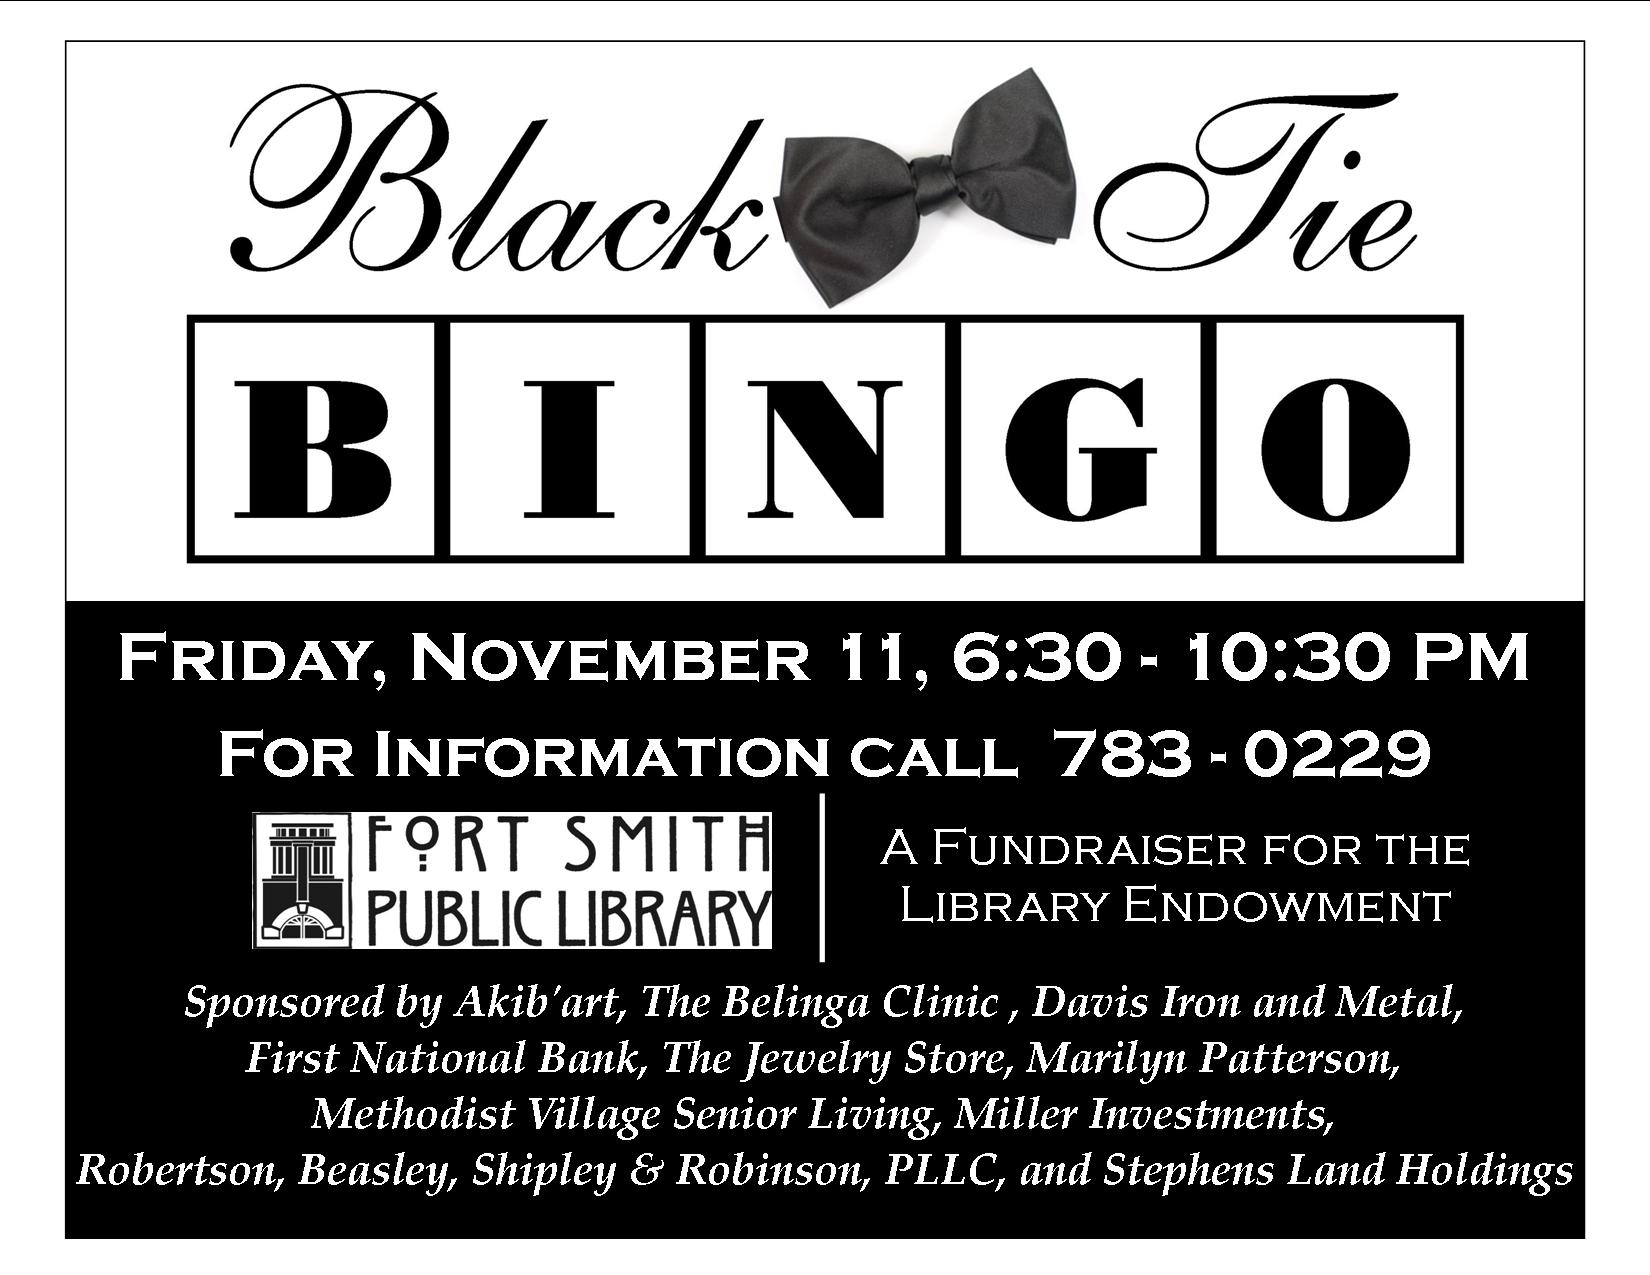 Black Tie Bingo event poster